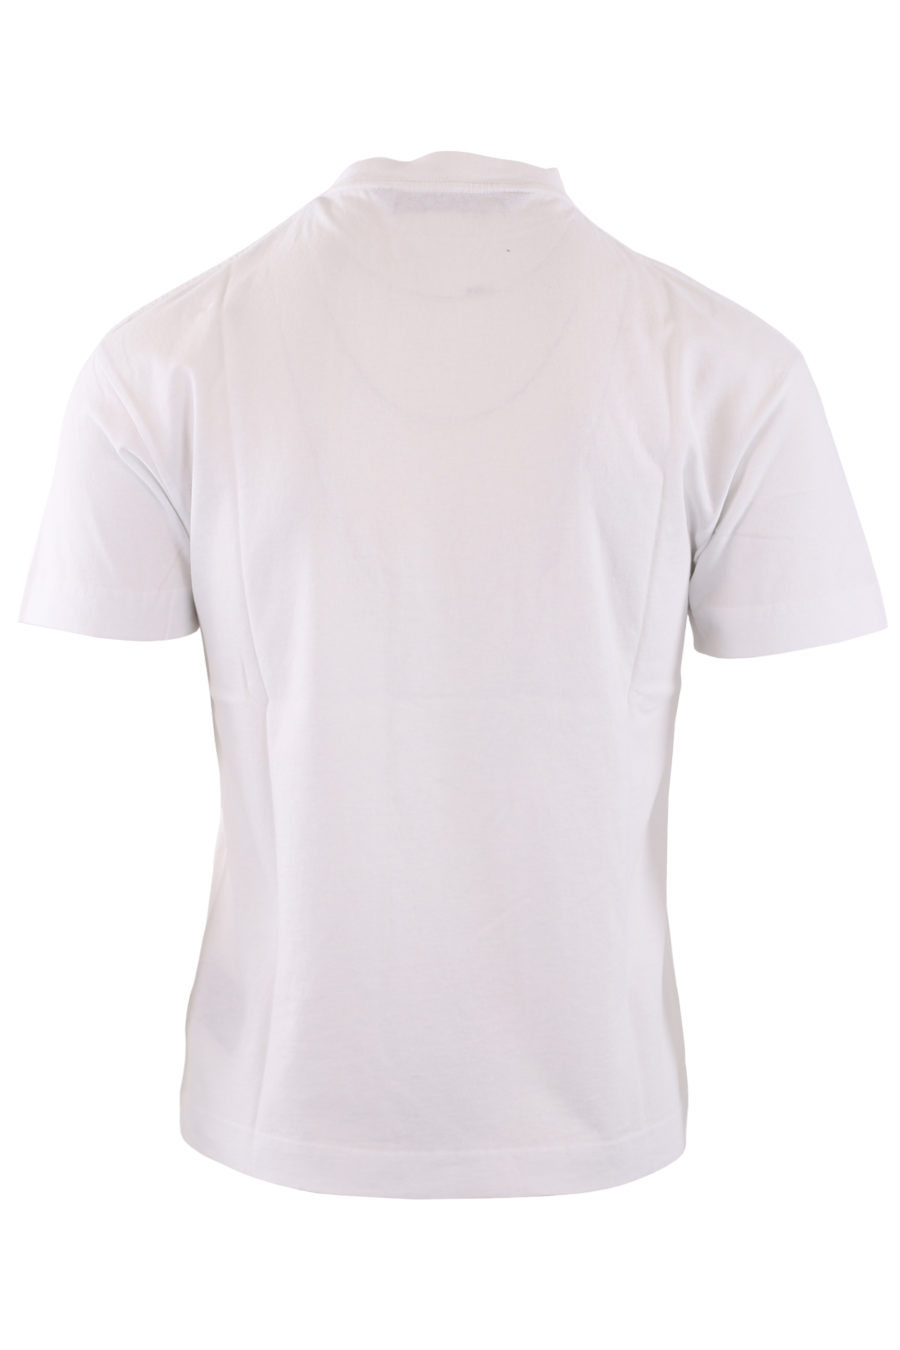 T-shirt blanc avec impression - IMG1 9242